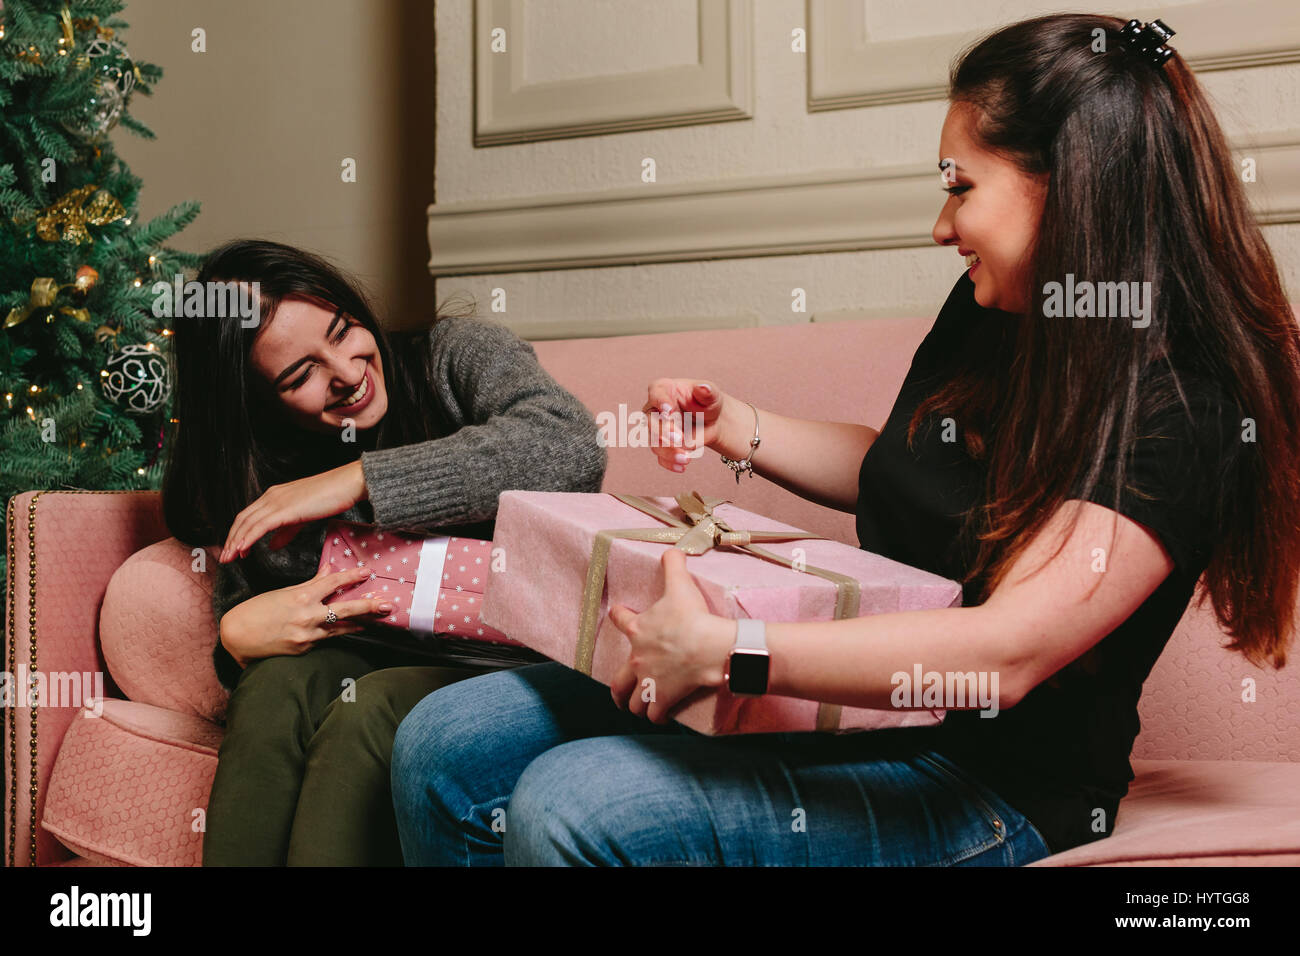 beautiful young girls having fun gifts to share. studio horizontal Photo. Stock Photo